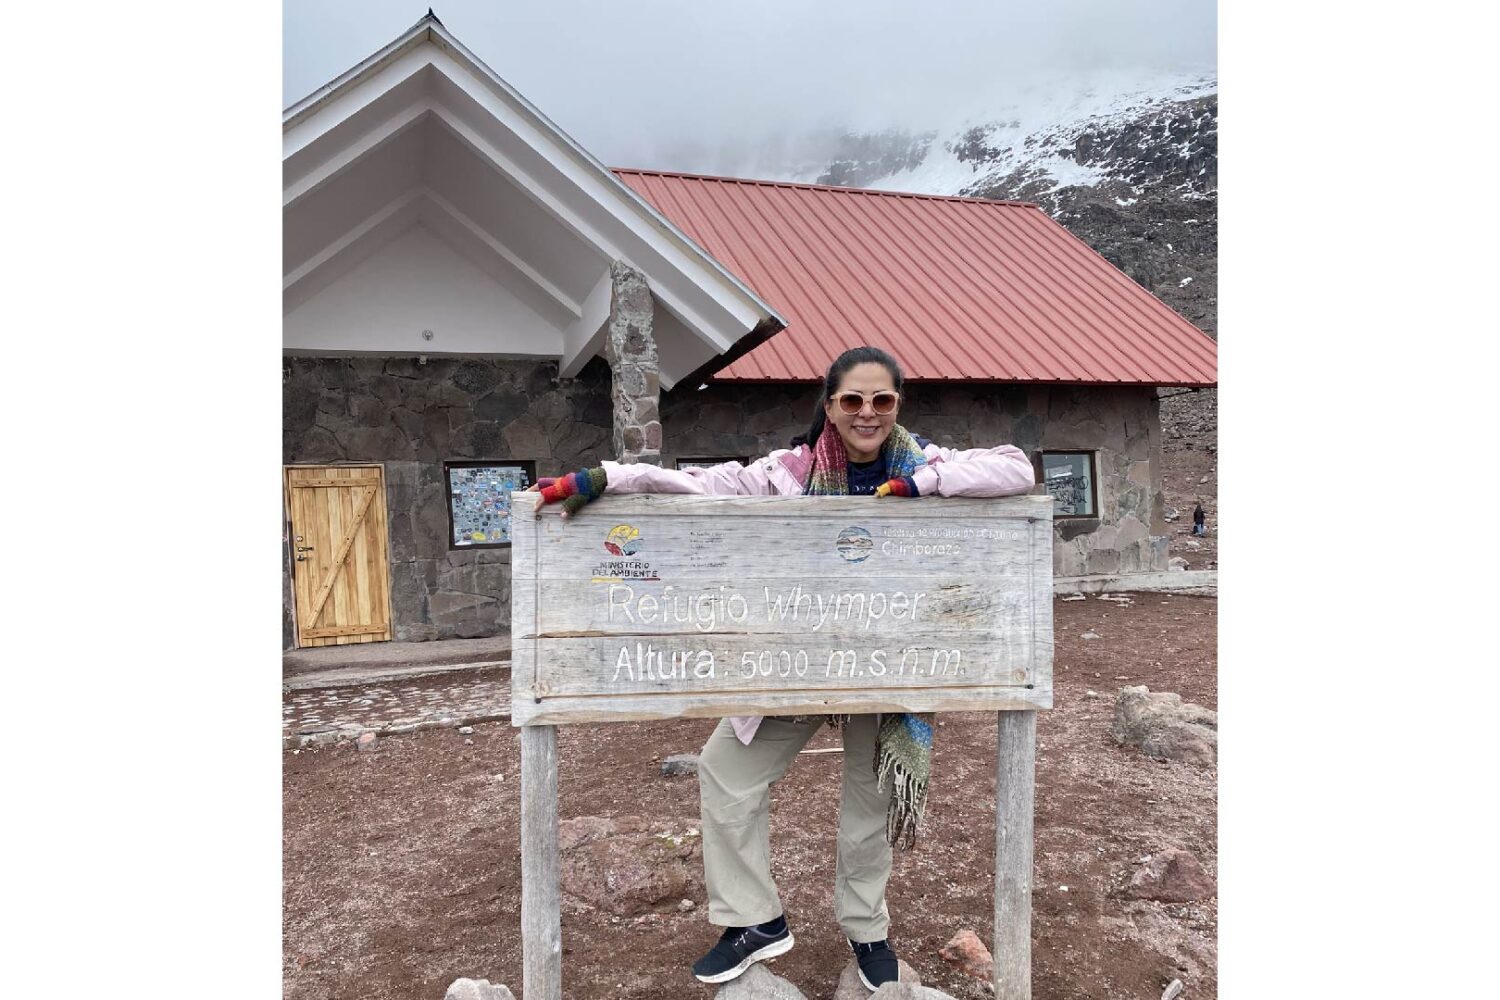 Alejandra Jimenez at the Whymper mountain refuge on Chiborazo at 5000 m.a.s.l.